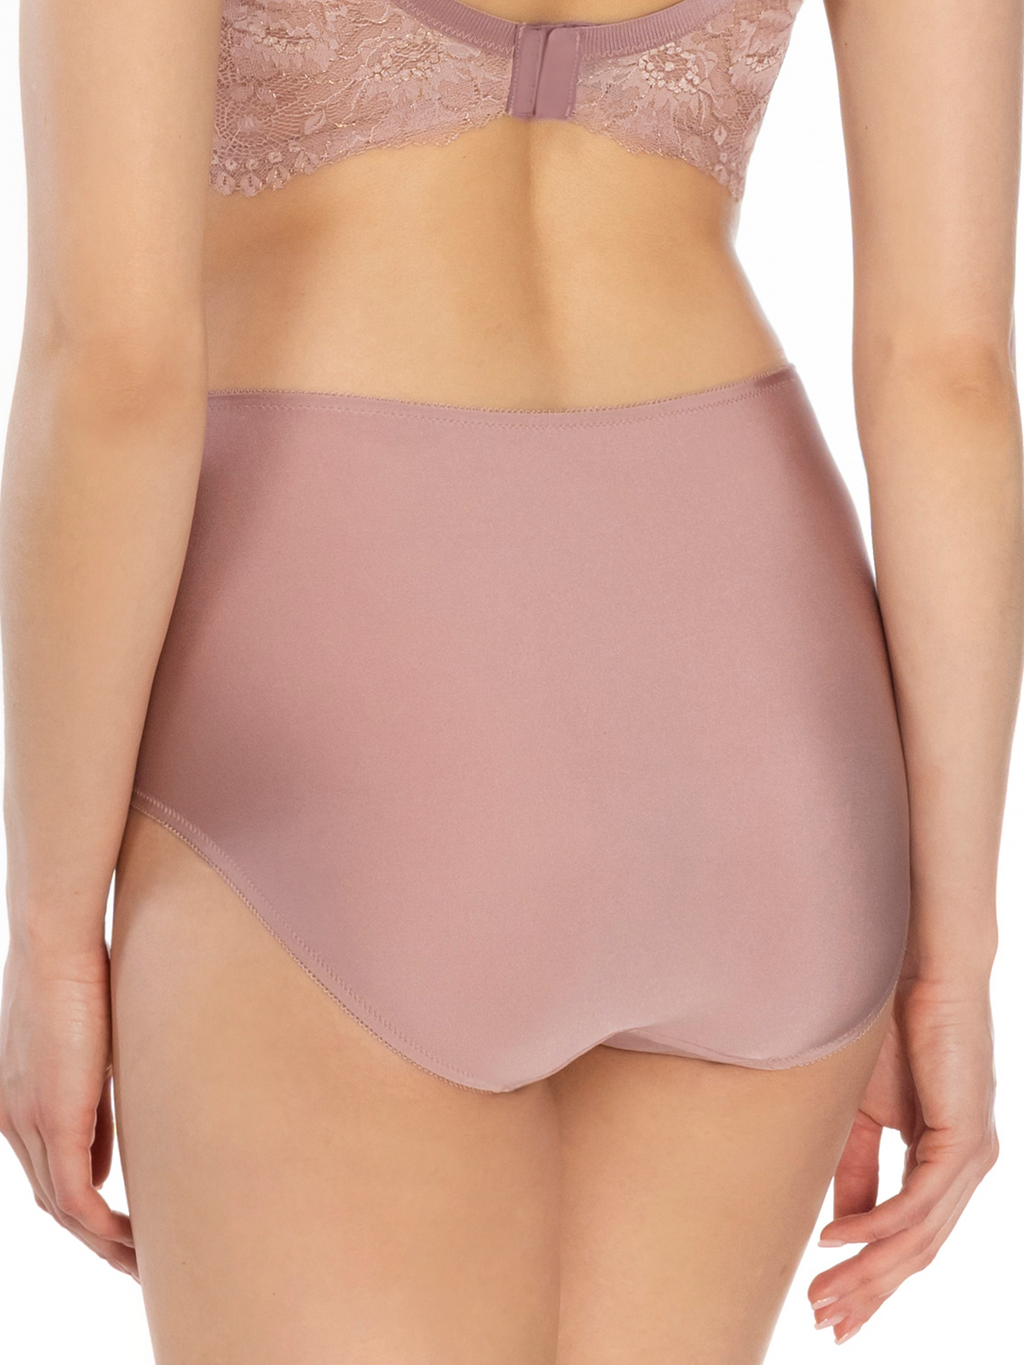 Lauma, Hazy Pink High Waist Panties, On Model Back, 97K53